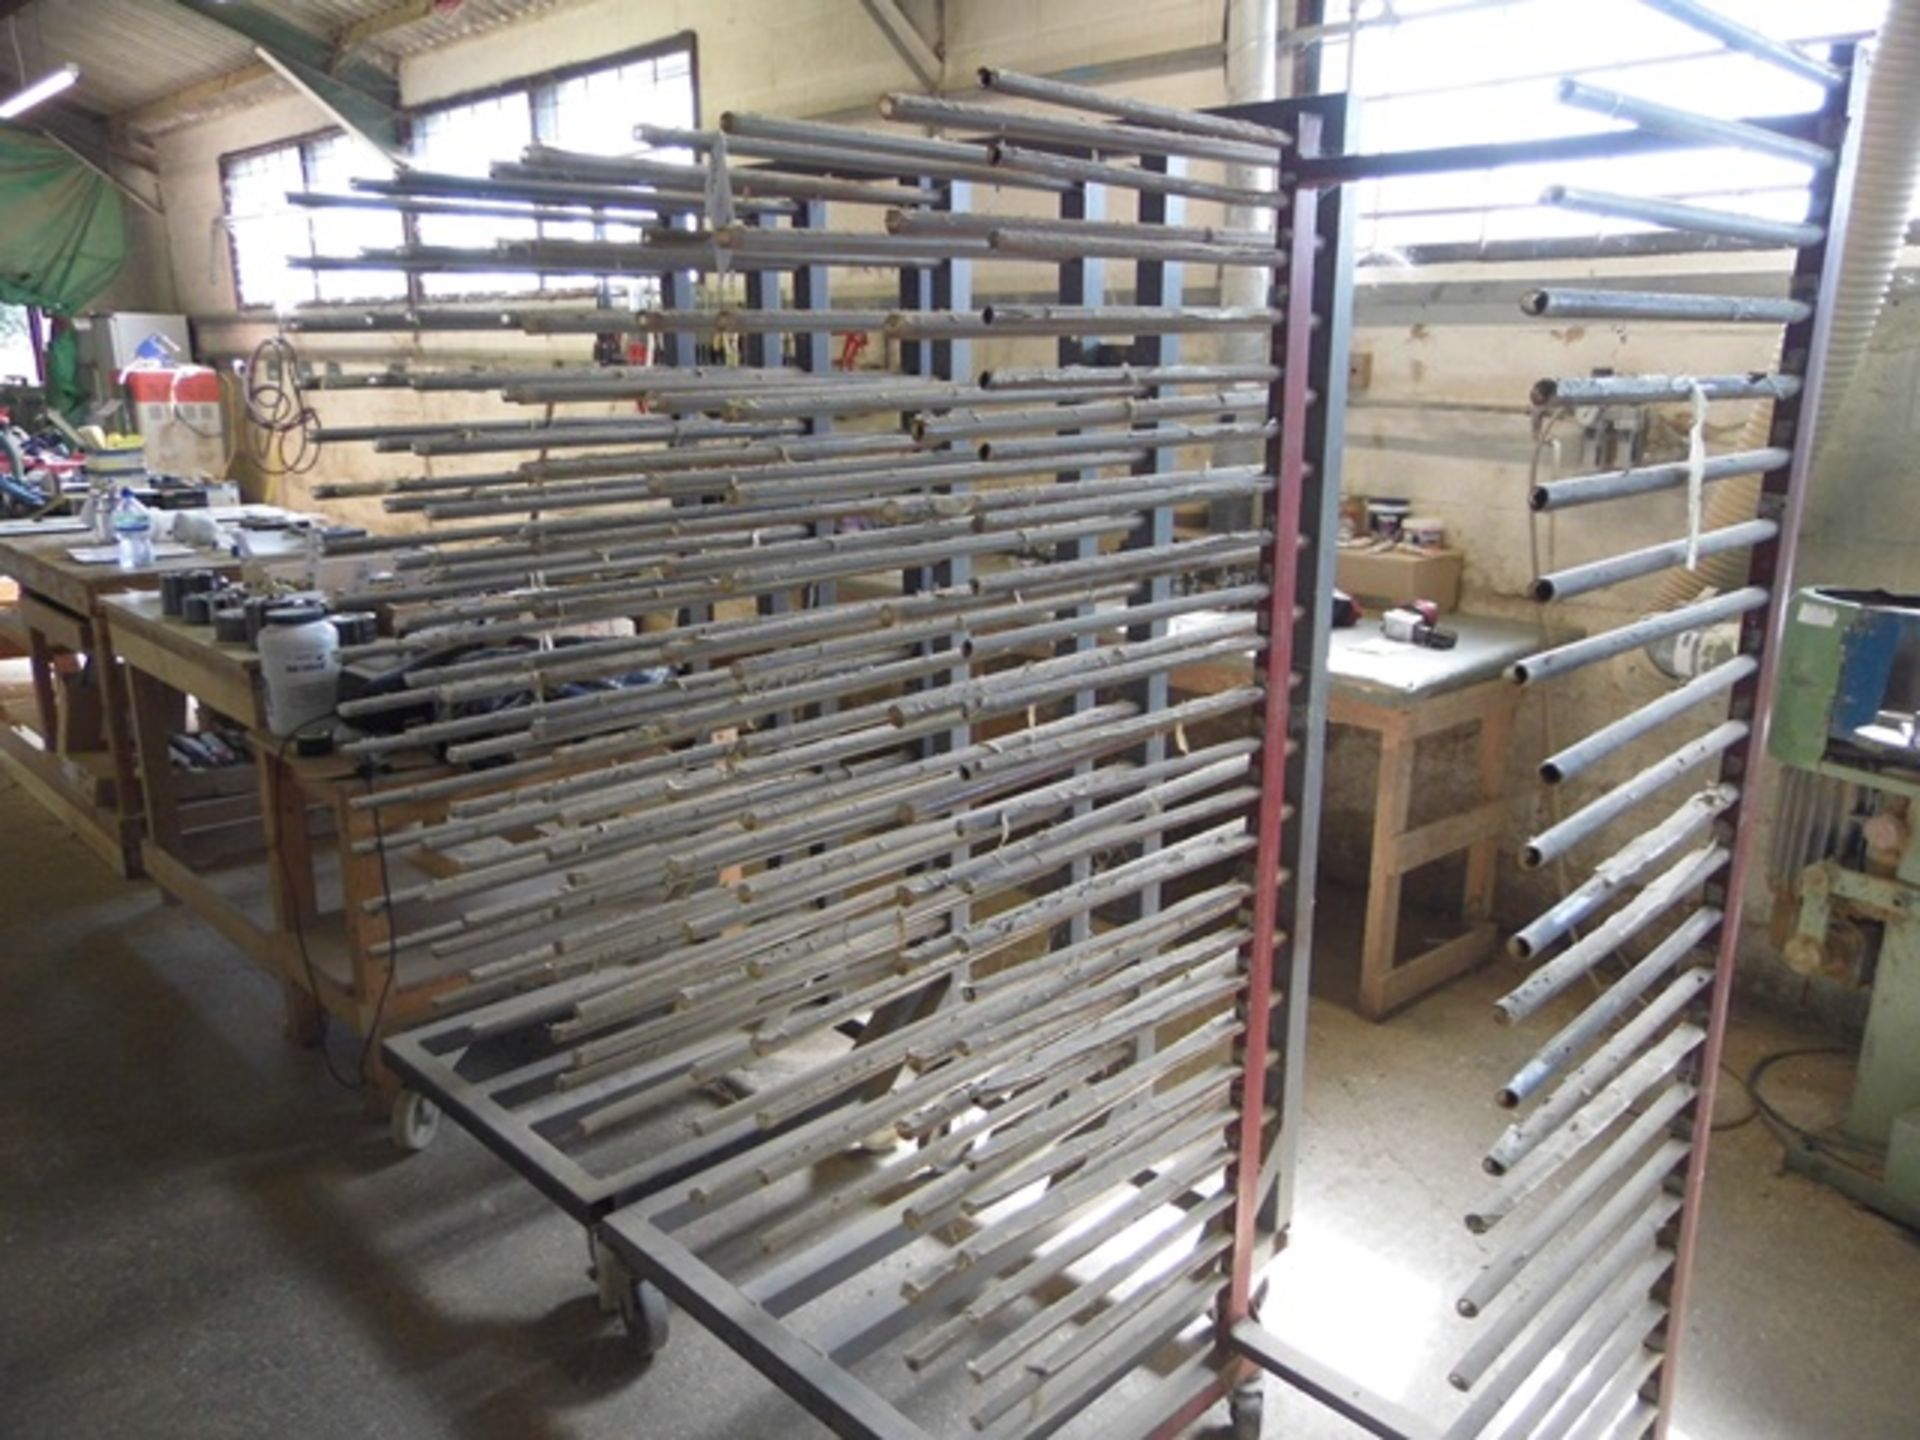 Three mobile drying racks